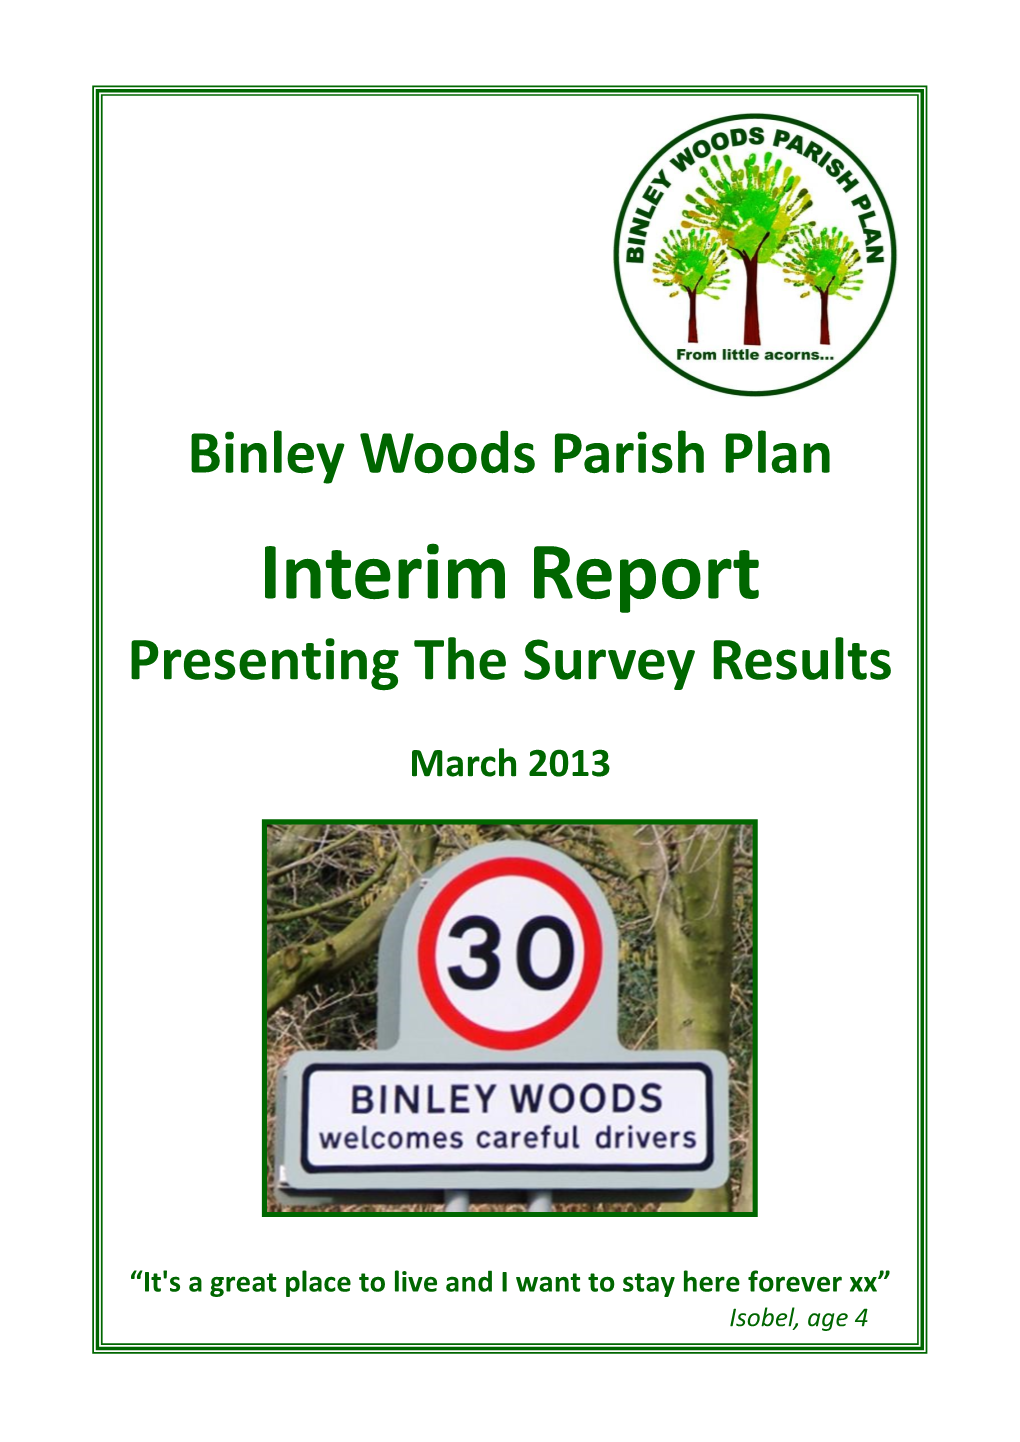 Binley Woods Parish Plan Interim Report Presenting the Survey Results